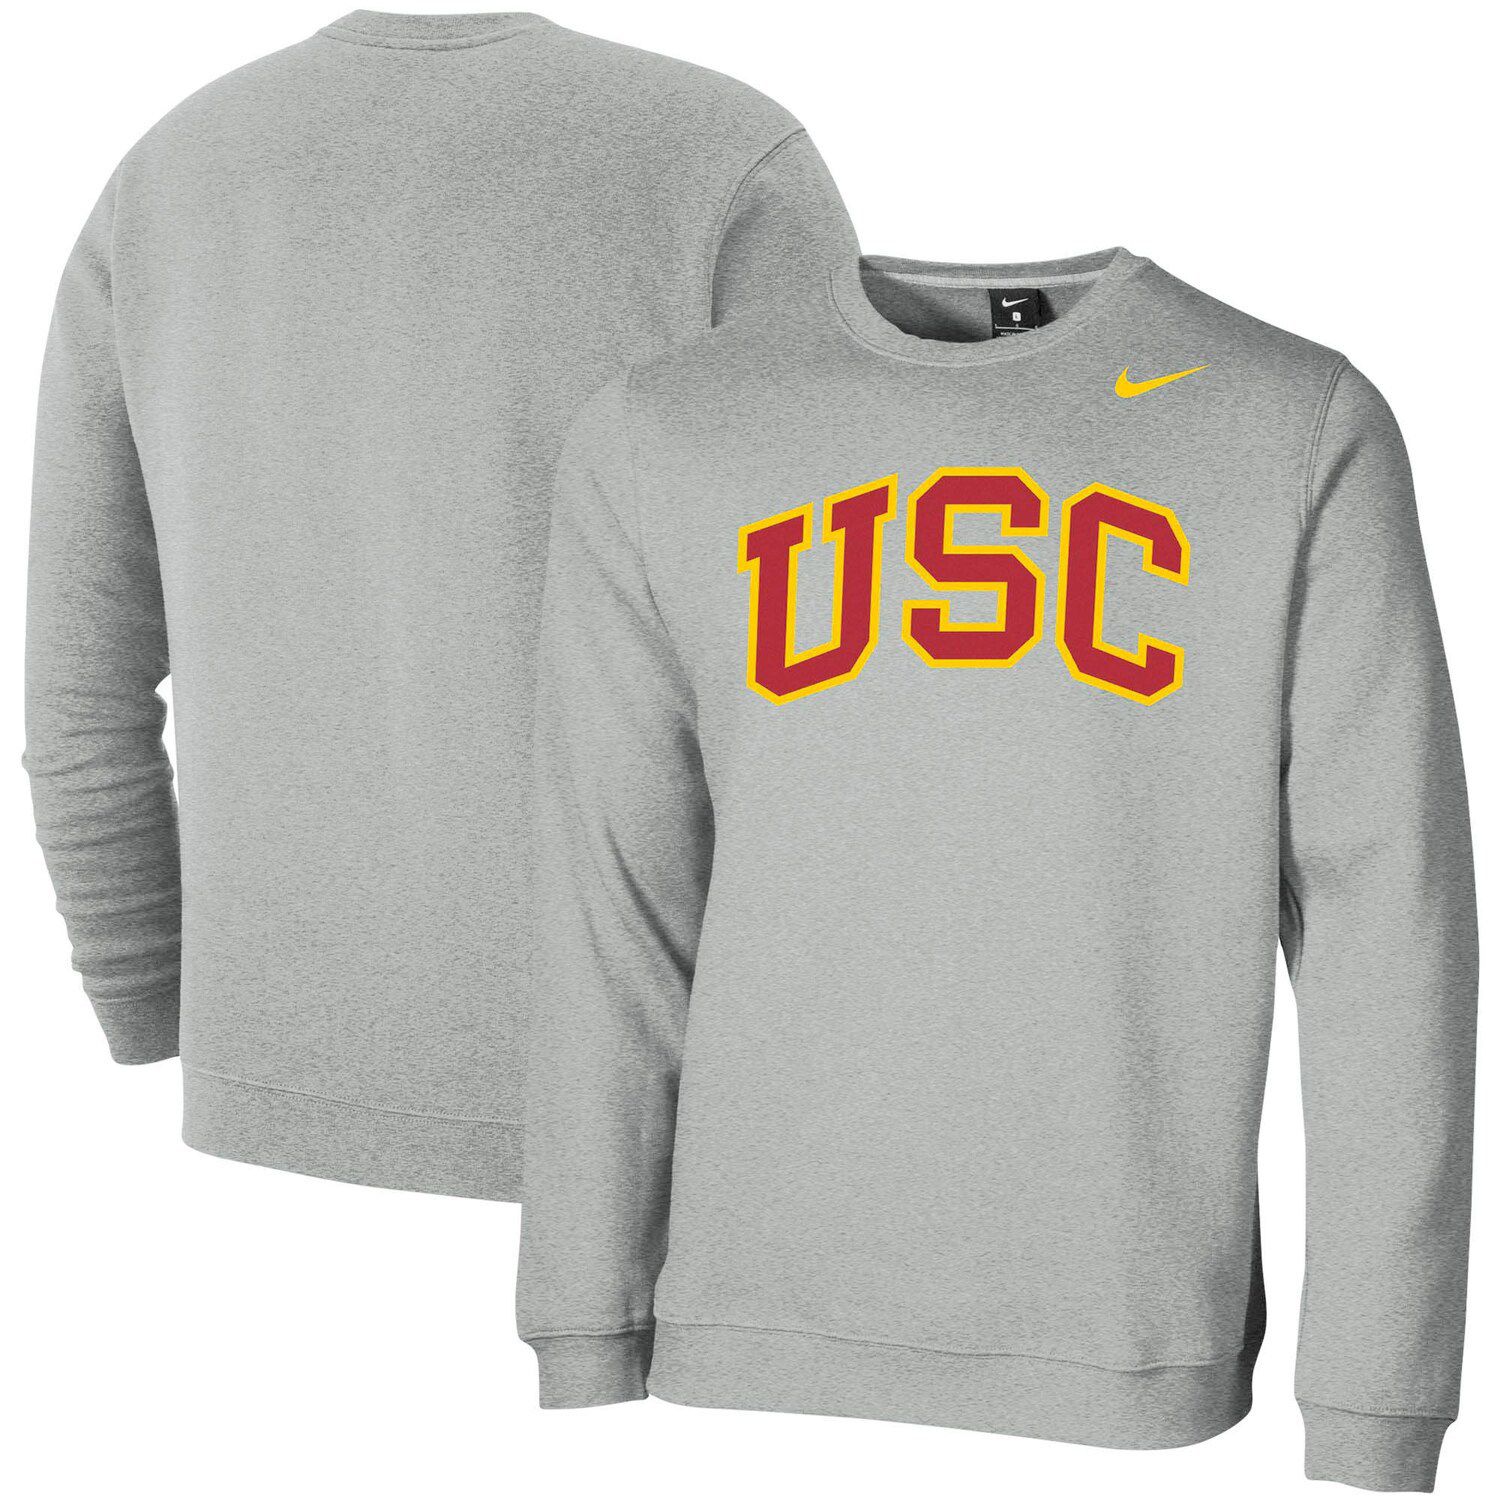 usc sweater